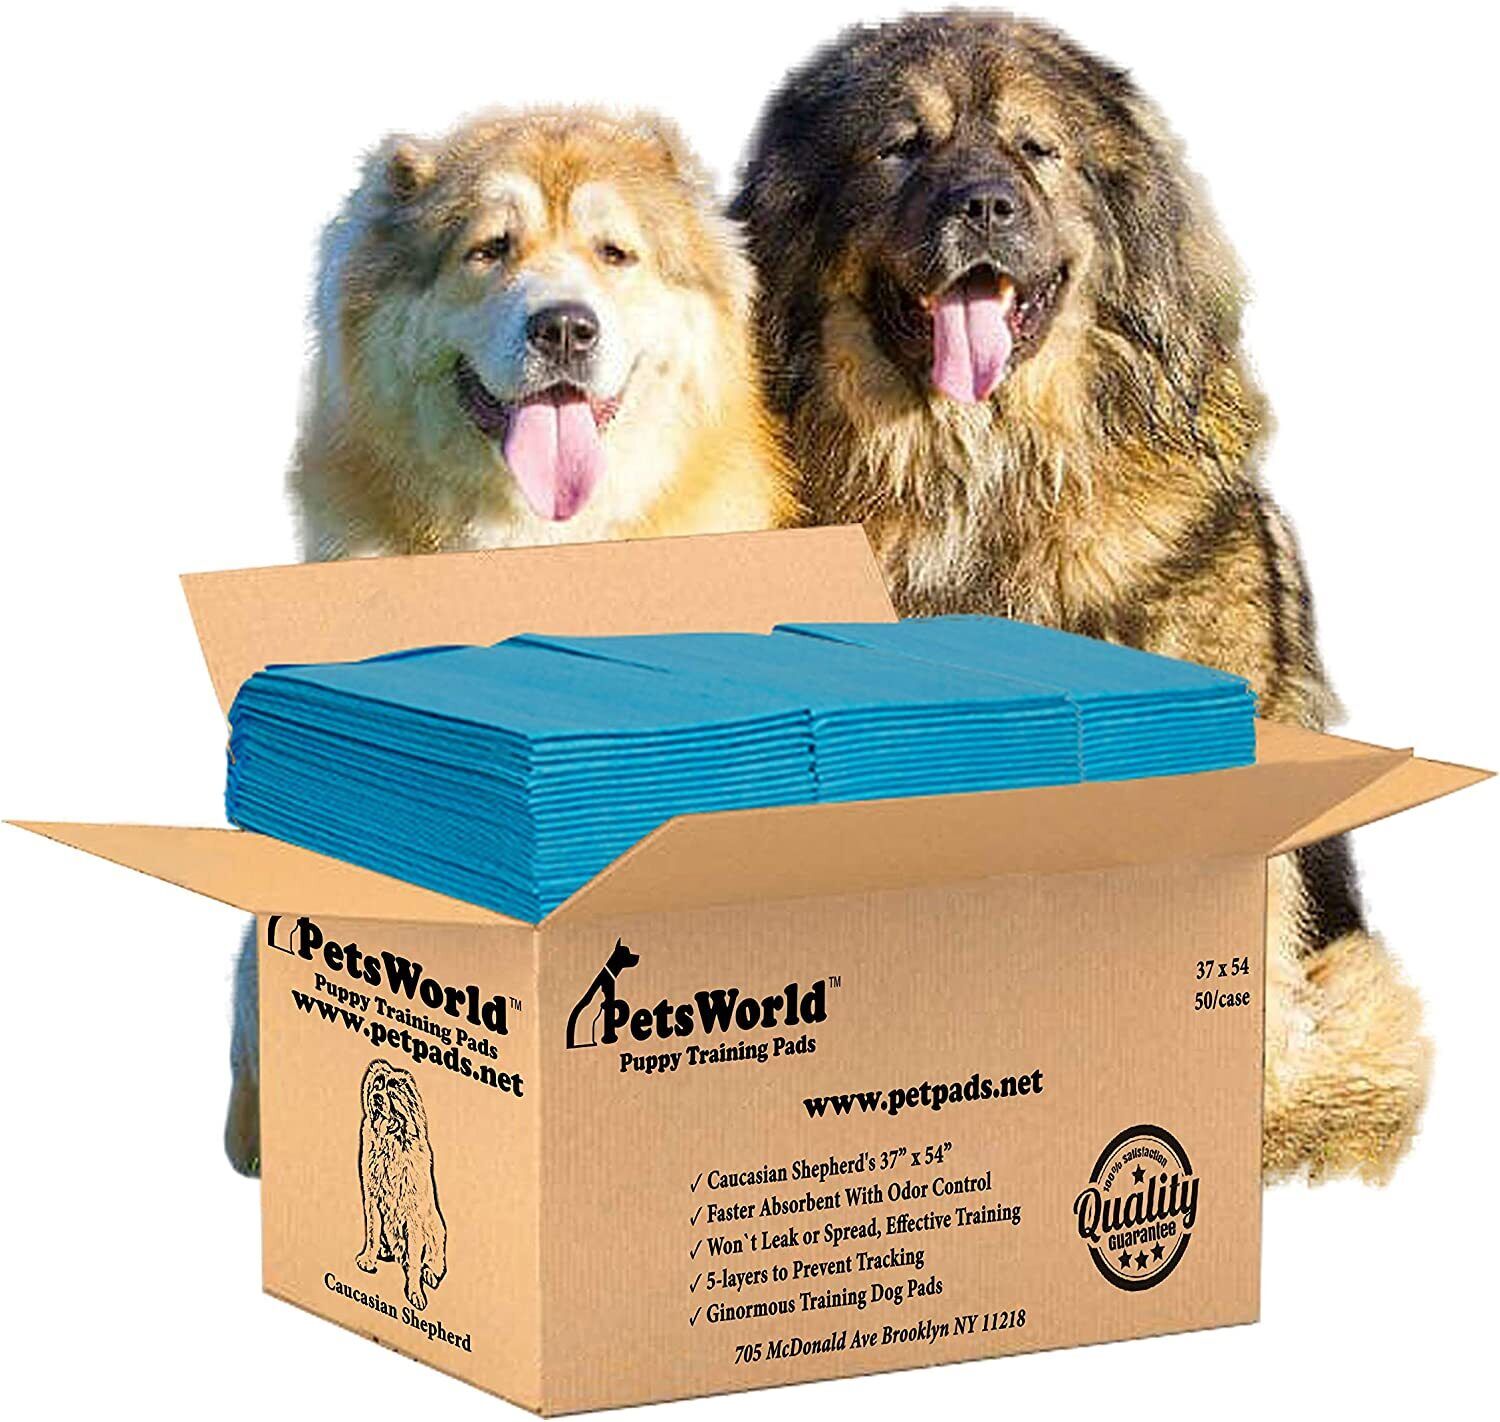 PETSWORLD Enormous Dog Training/Potty Pads (37x54 inch) Optional Adhesive Tape